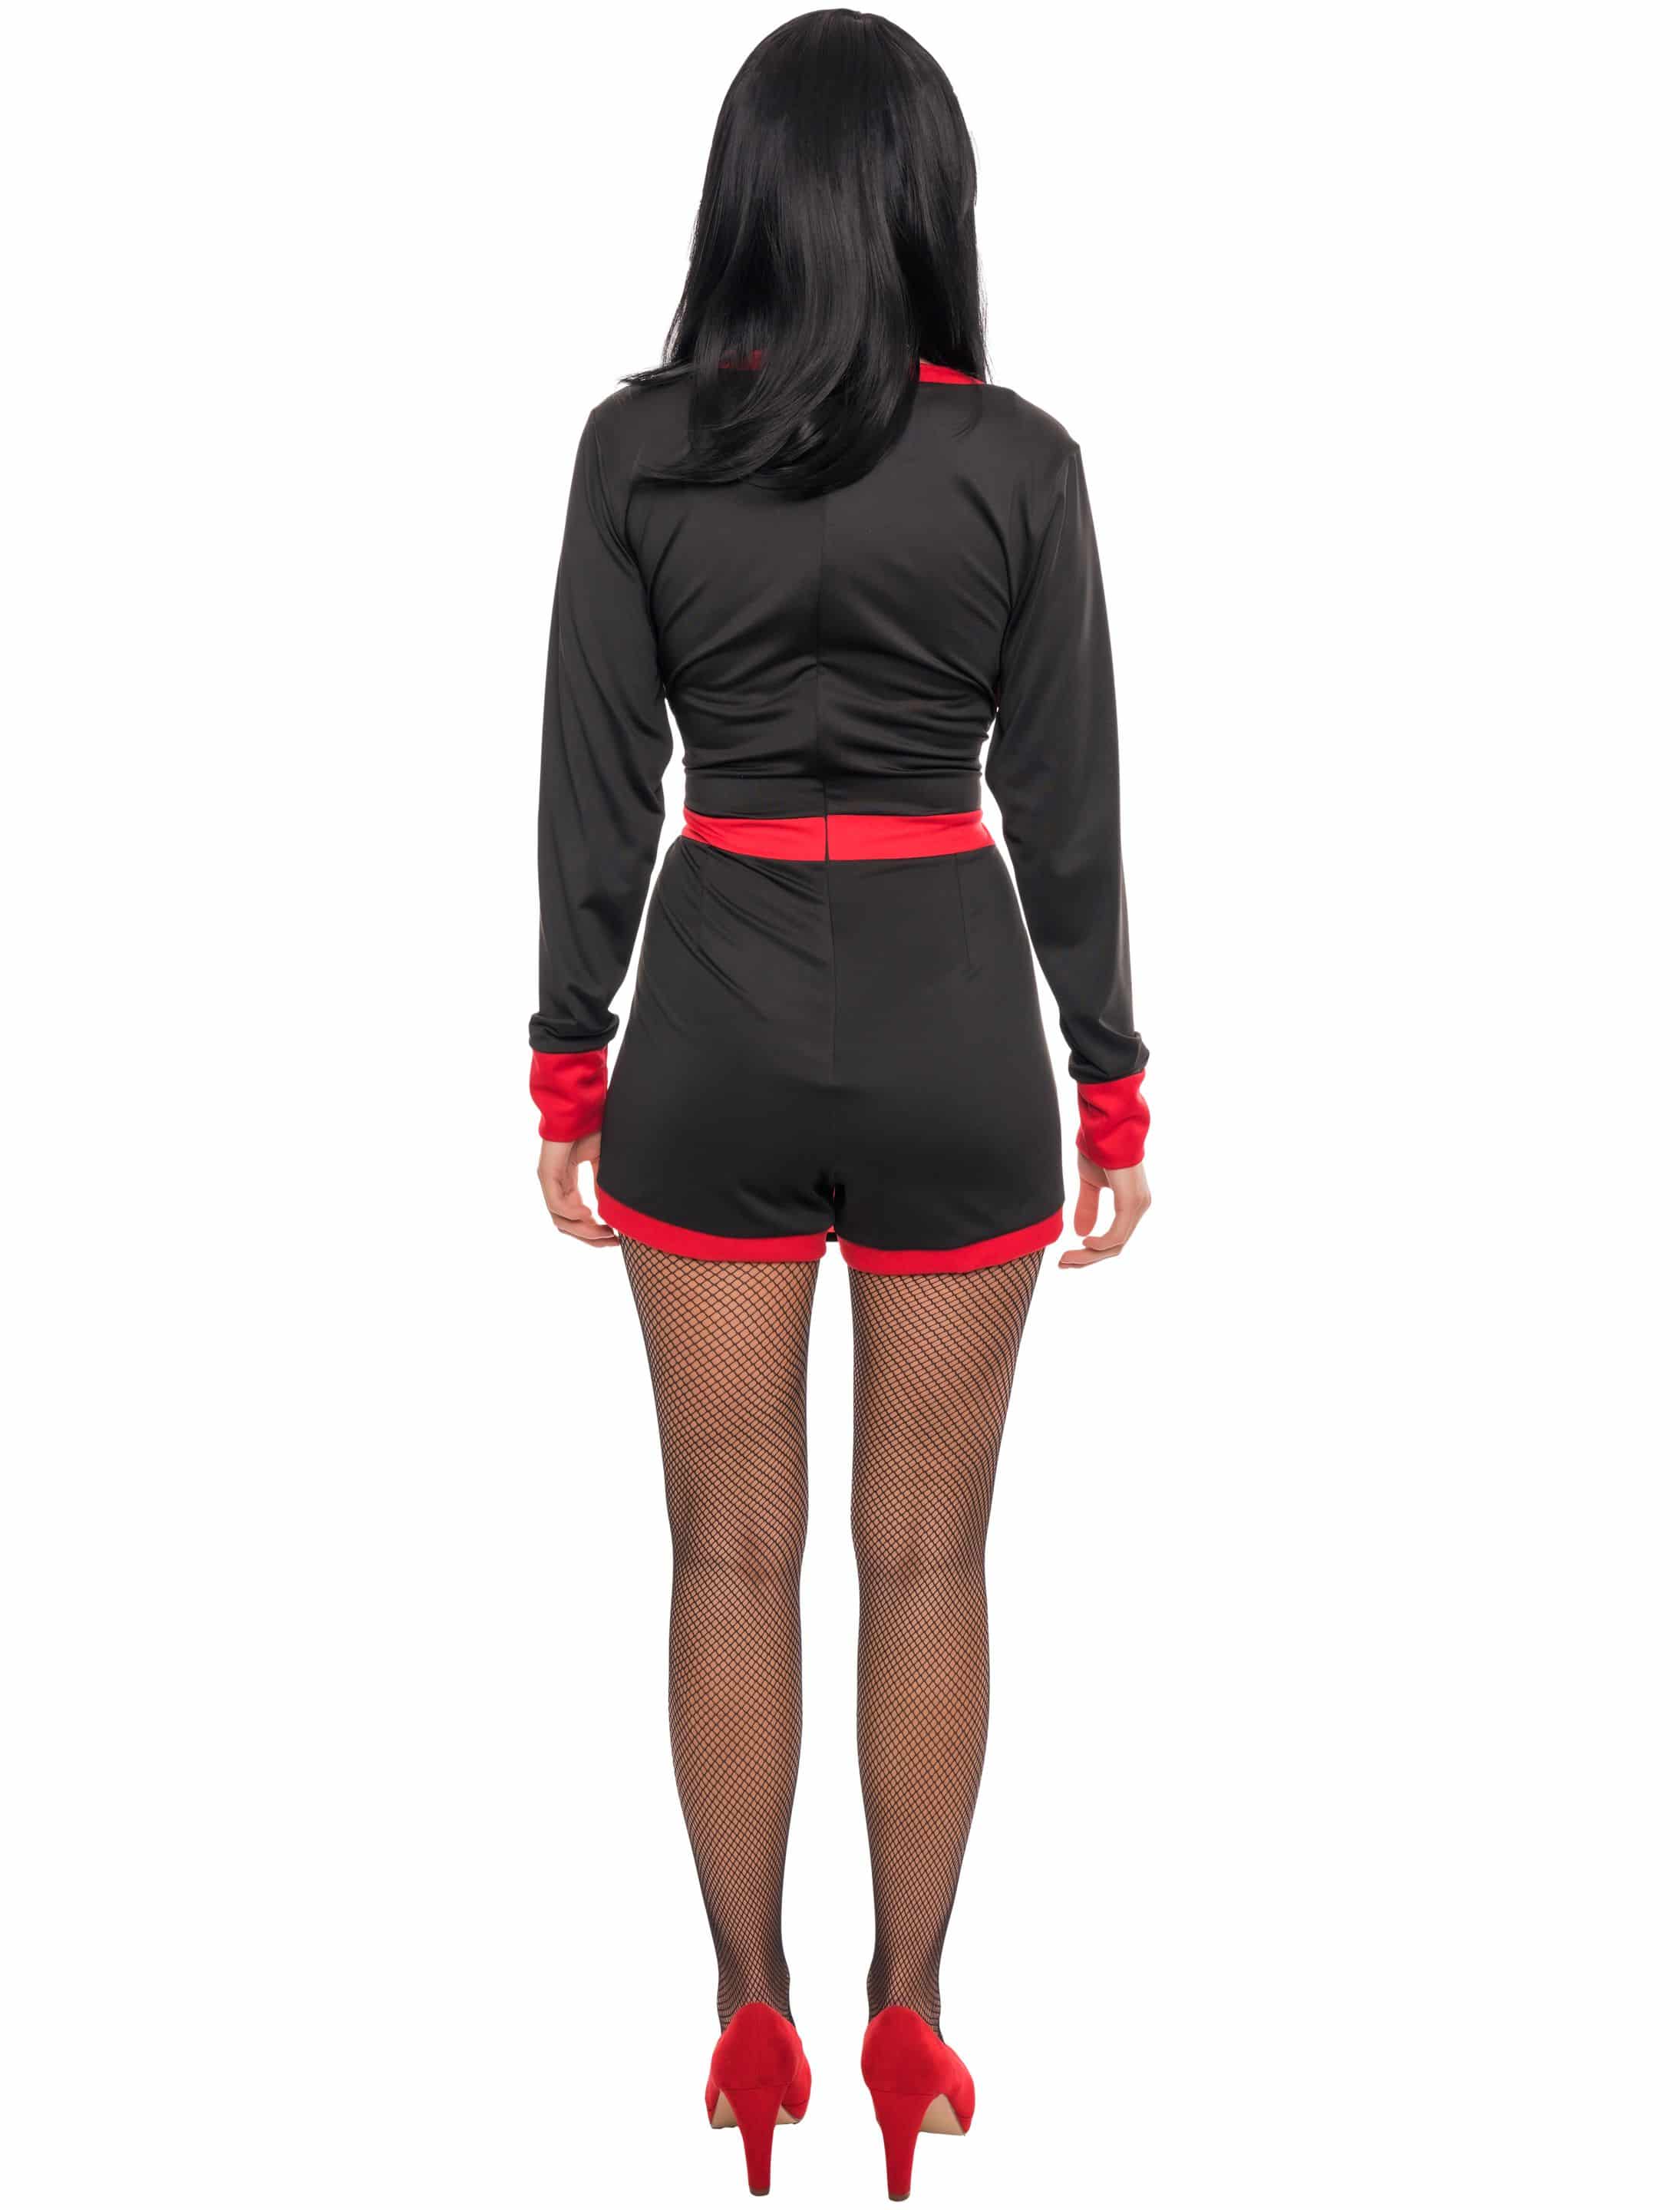 Kleid Ninja Damen schwarz/rot L/XL